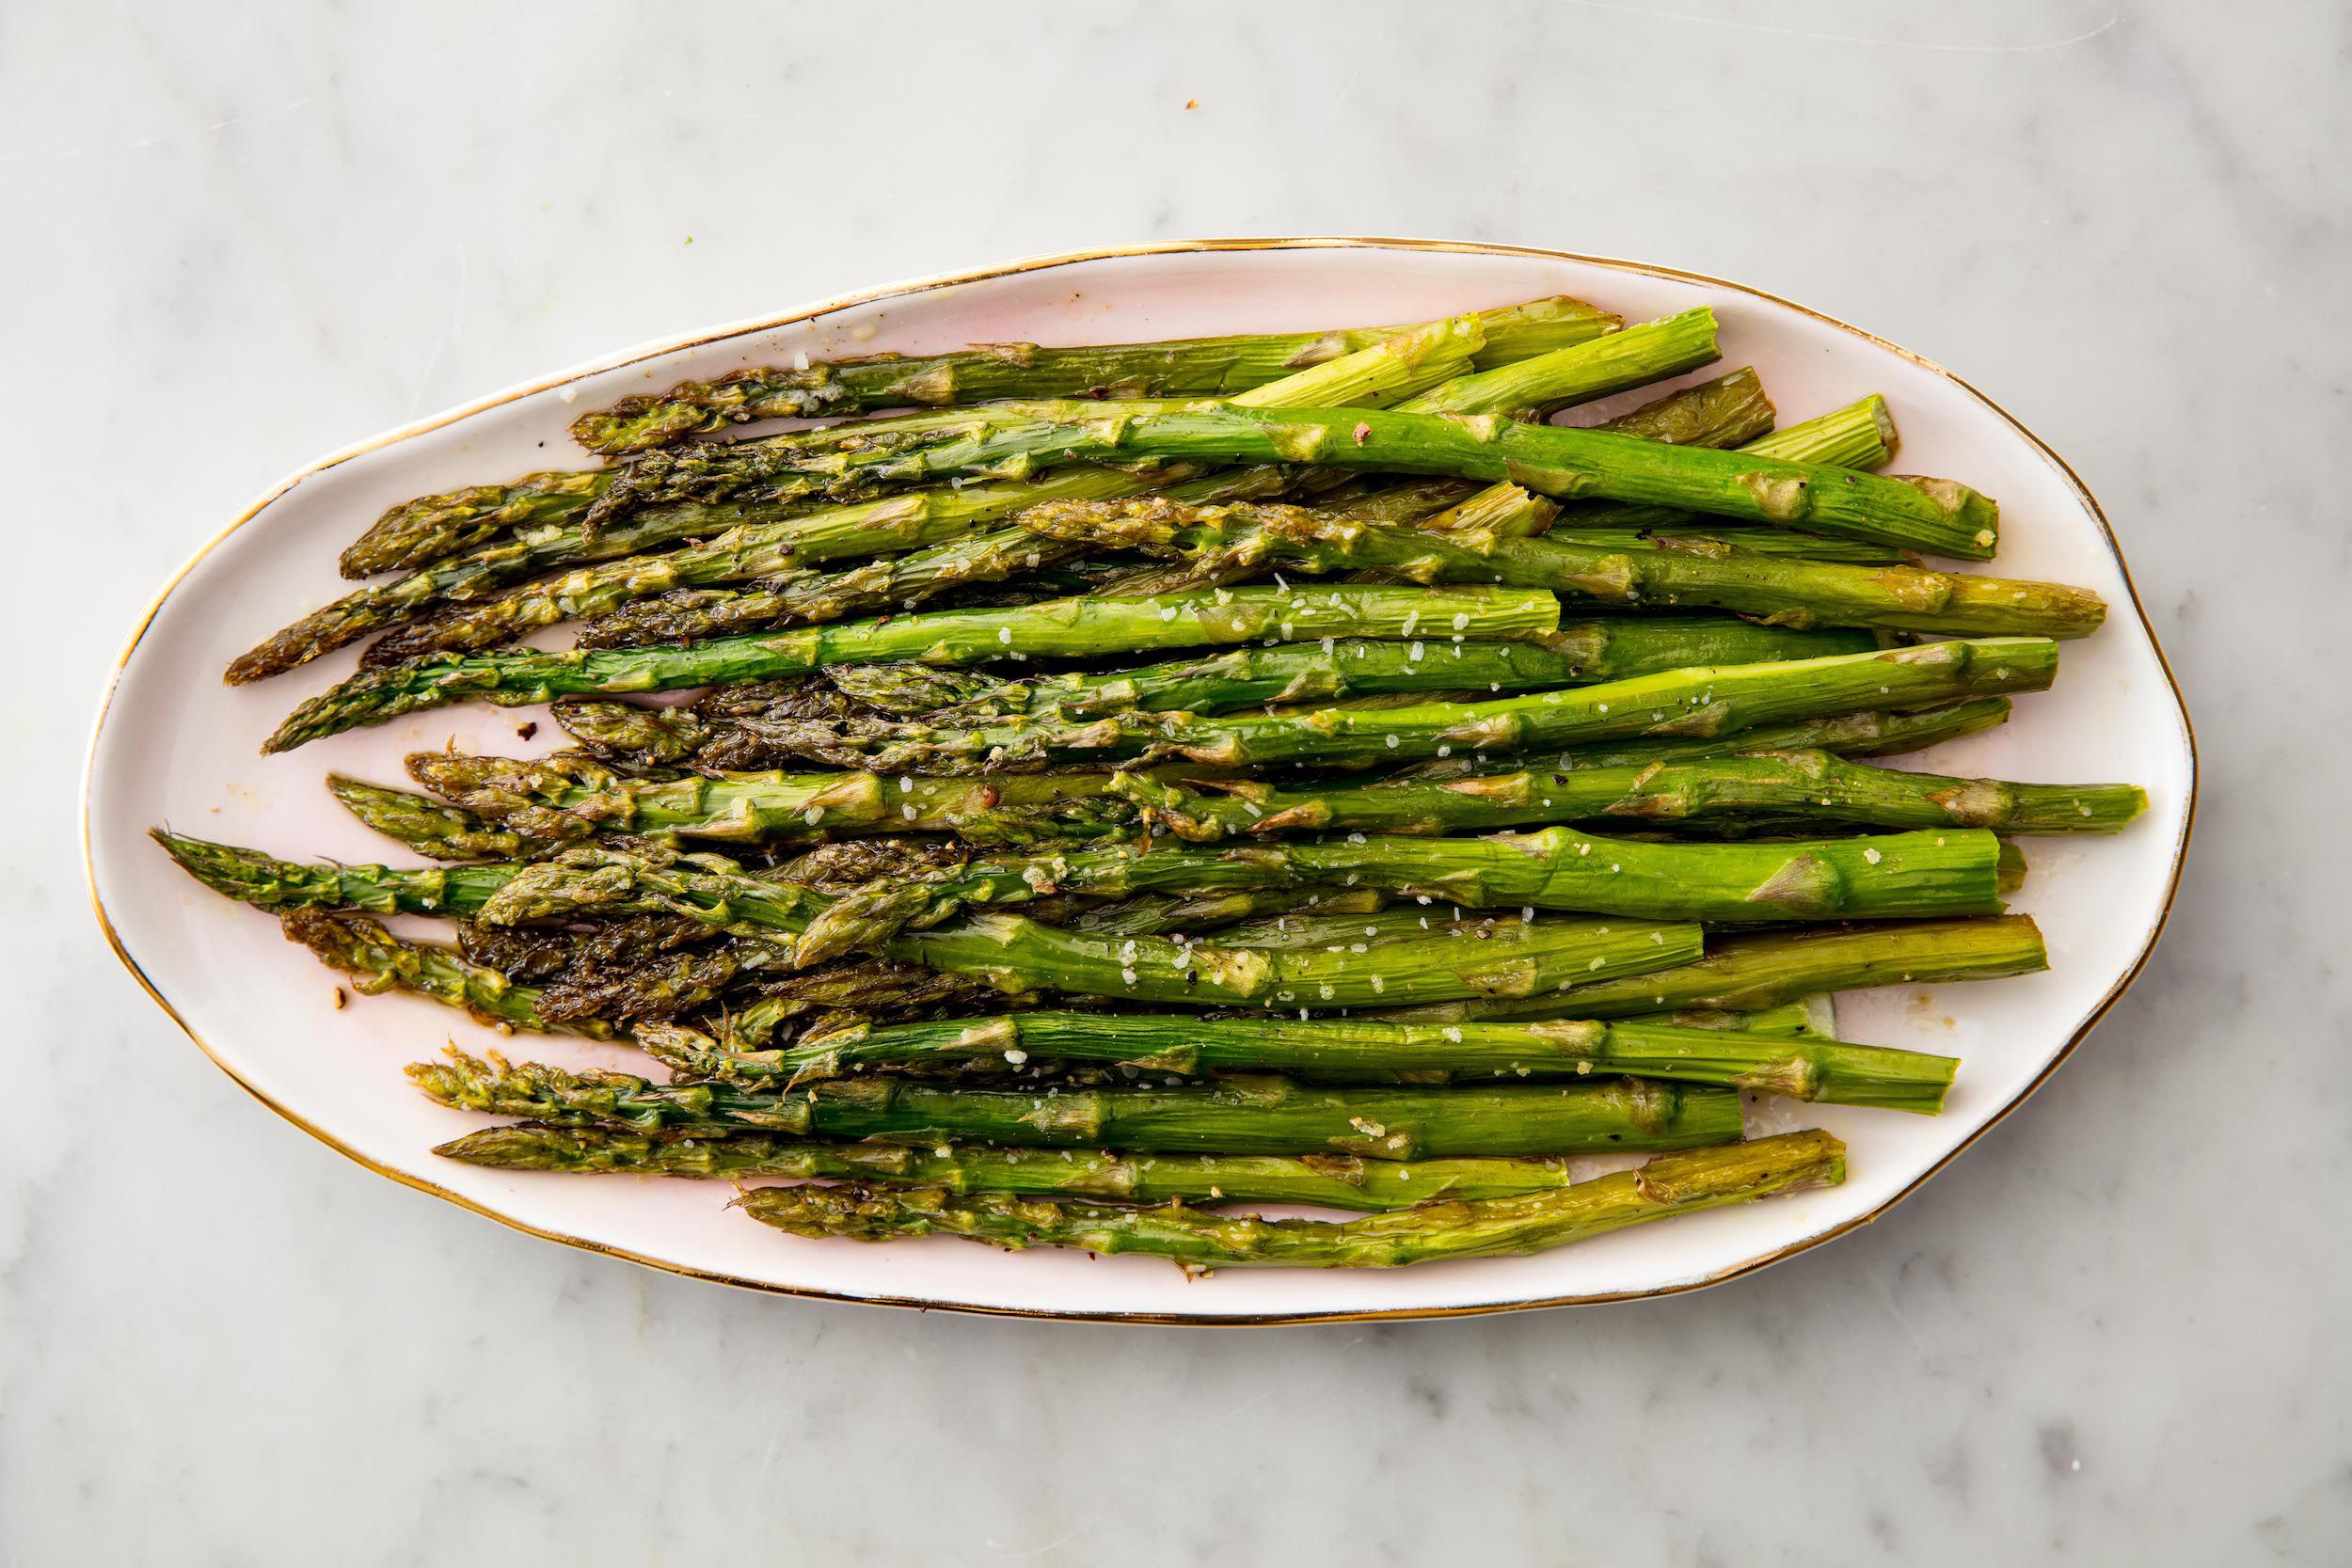 Best Oven Roasted Asparagus Recipe - How to Roast Asparagus